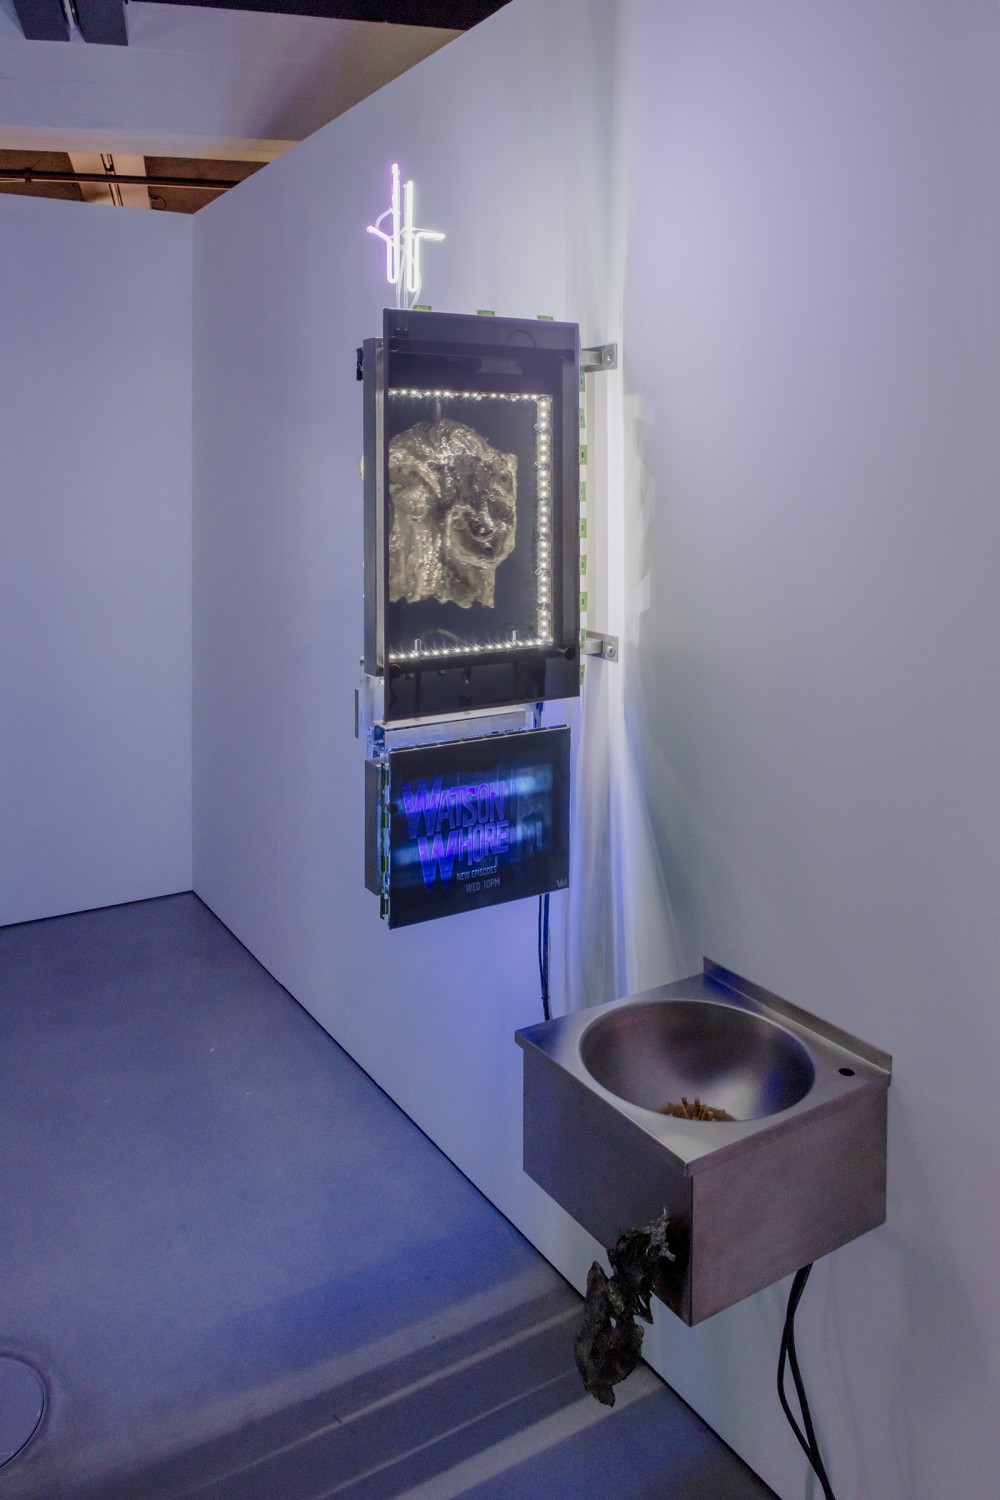 Chloé Delarue, TAFAA – FERTILITY DEVICE (NUDGE FOR THE SCAPEGOAT), 2021, installation view, «Schweizer Medienkunst, Pax Art Awards 2021», 2022, HEK (House of Electronic Arts), Photo: Franz Wamhof